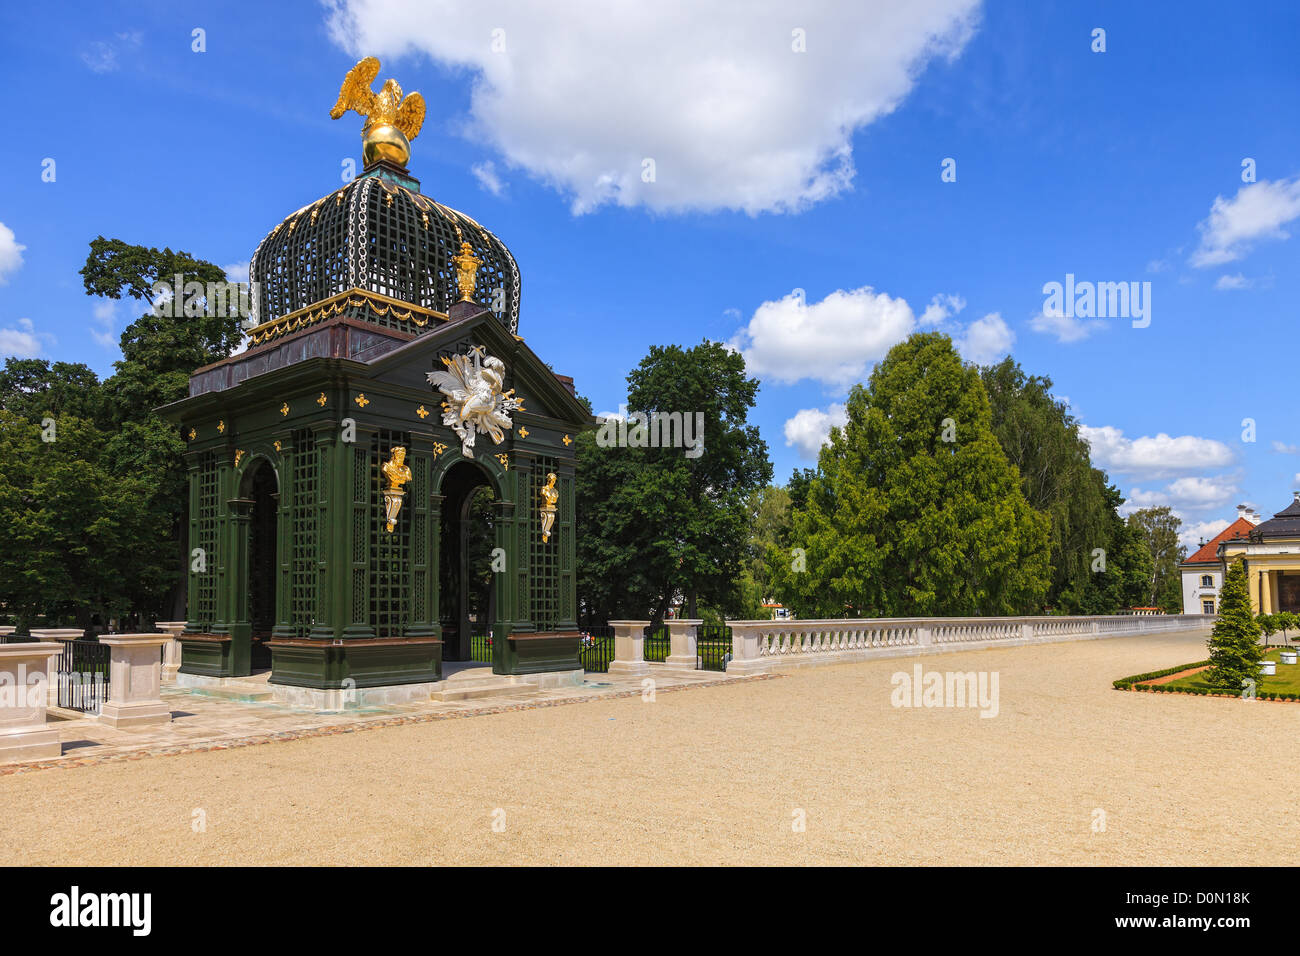 Barocker Pavillon auf der Adler in den Gärten Branicki. Bialystok, Polen. Stockfoto